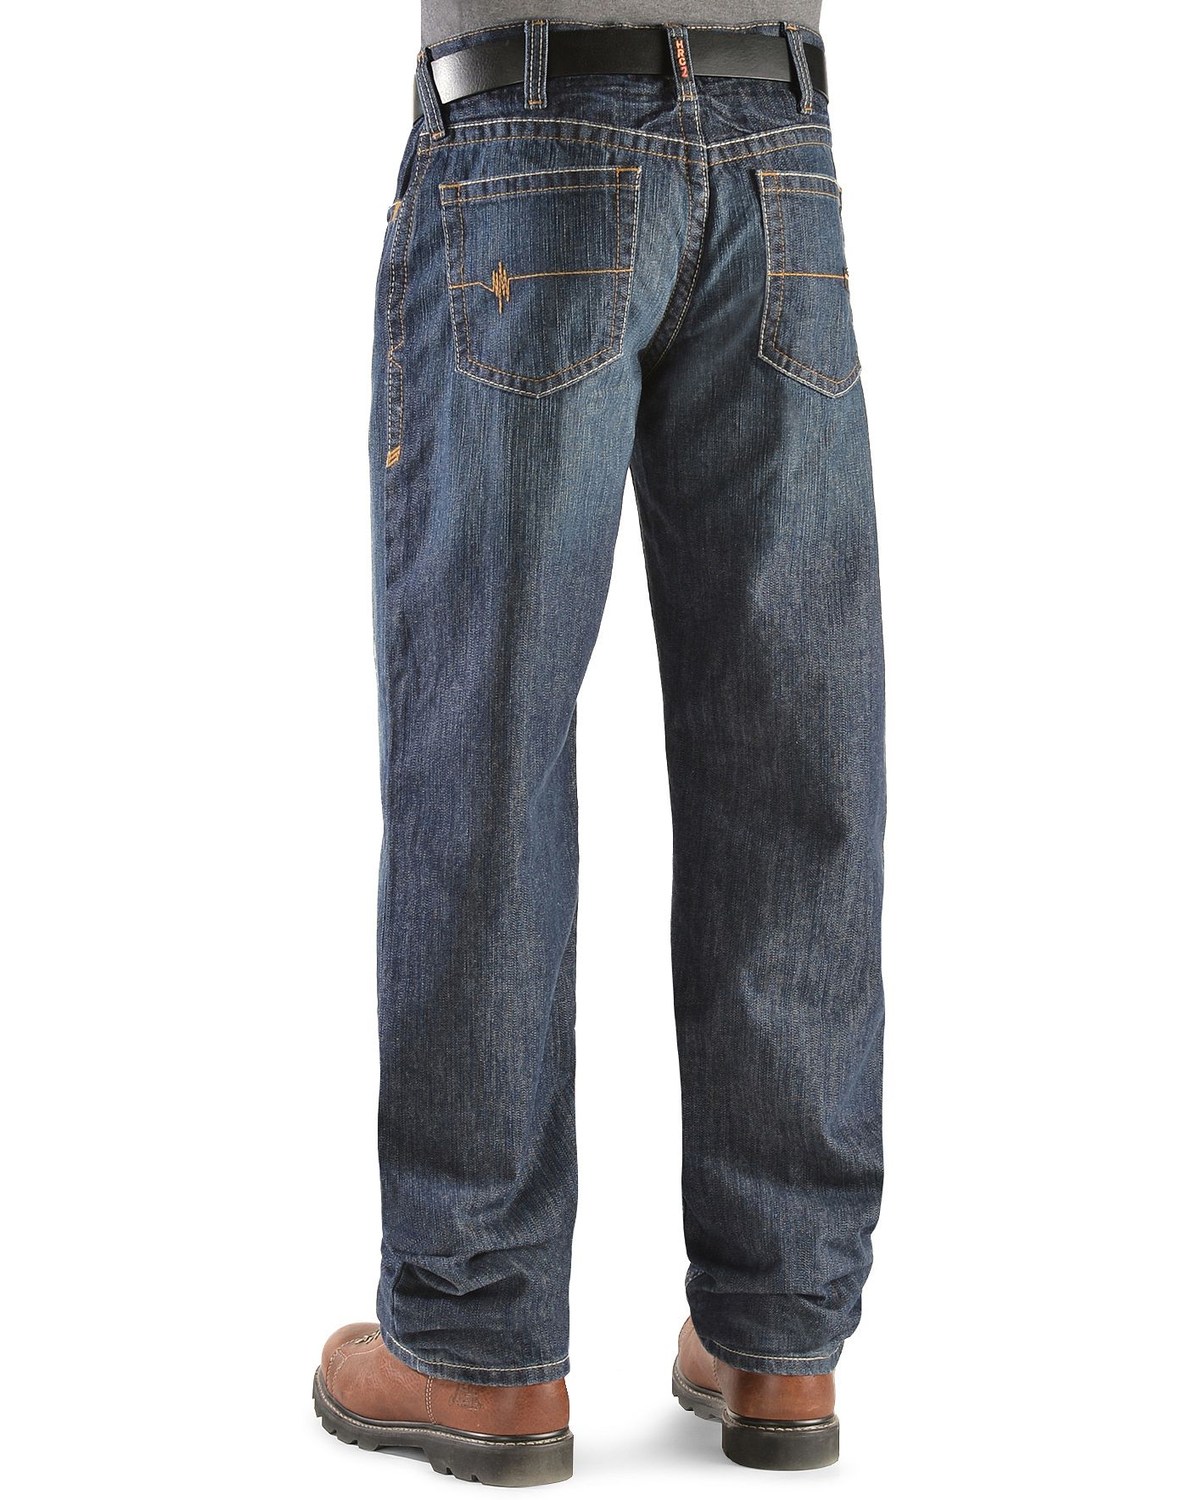 Ariat Men's Shale Fire Resistant Work Jeans